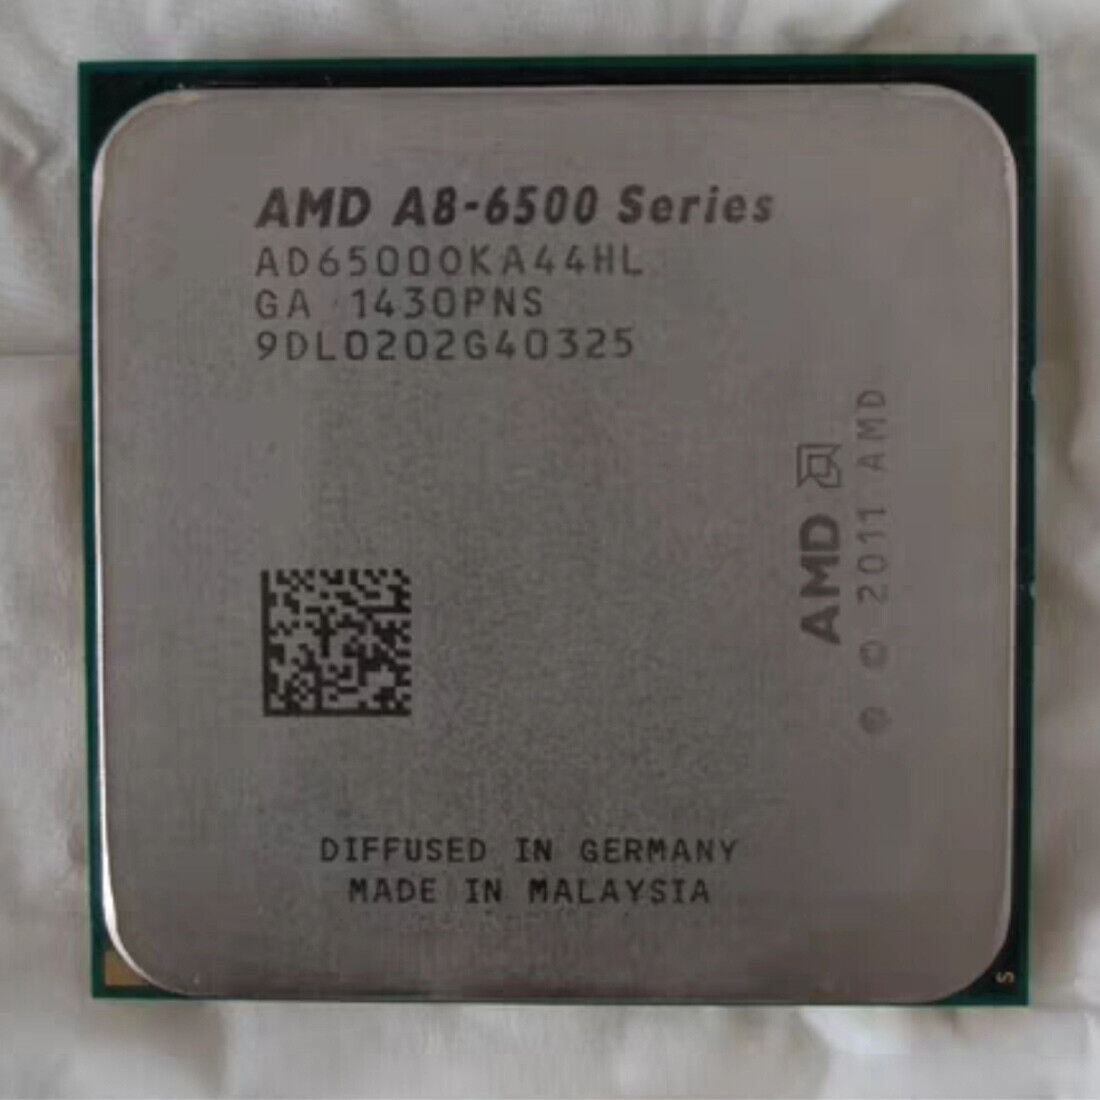 AMD A8-Series A8-6500 AD650BOKA44HL 3.5GHz Quad Core Socket FM2 Processor CPU